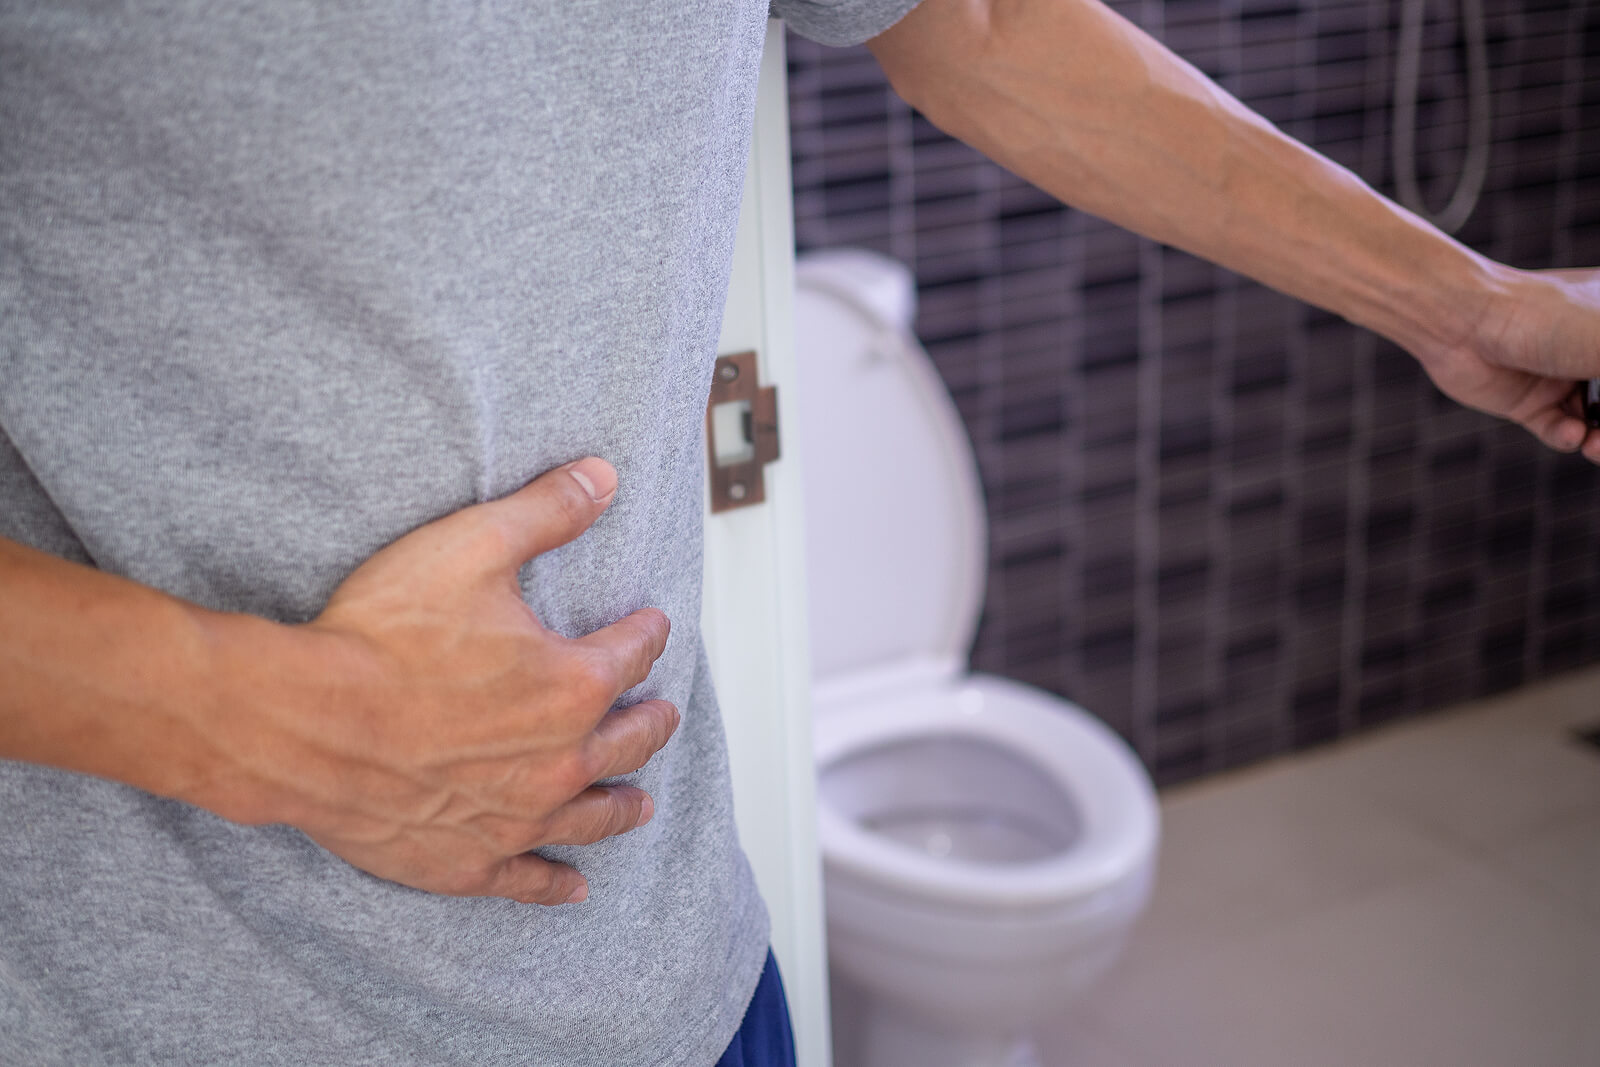 Ulcerative colitis and diarrhea